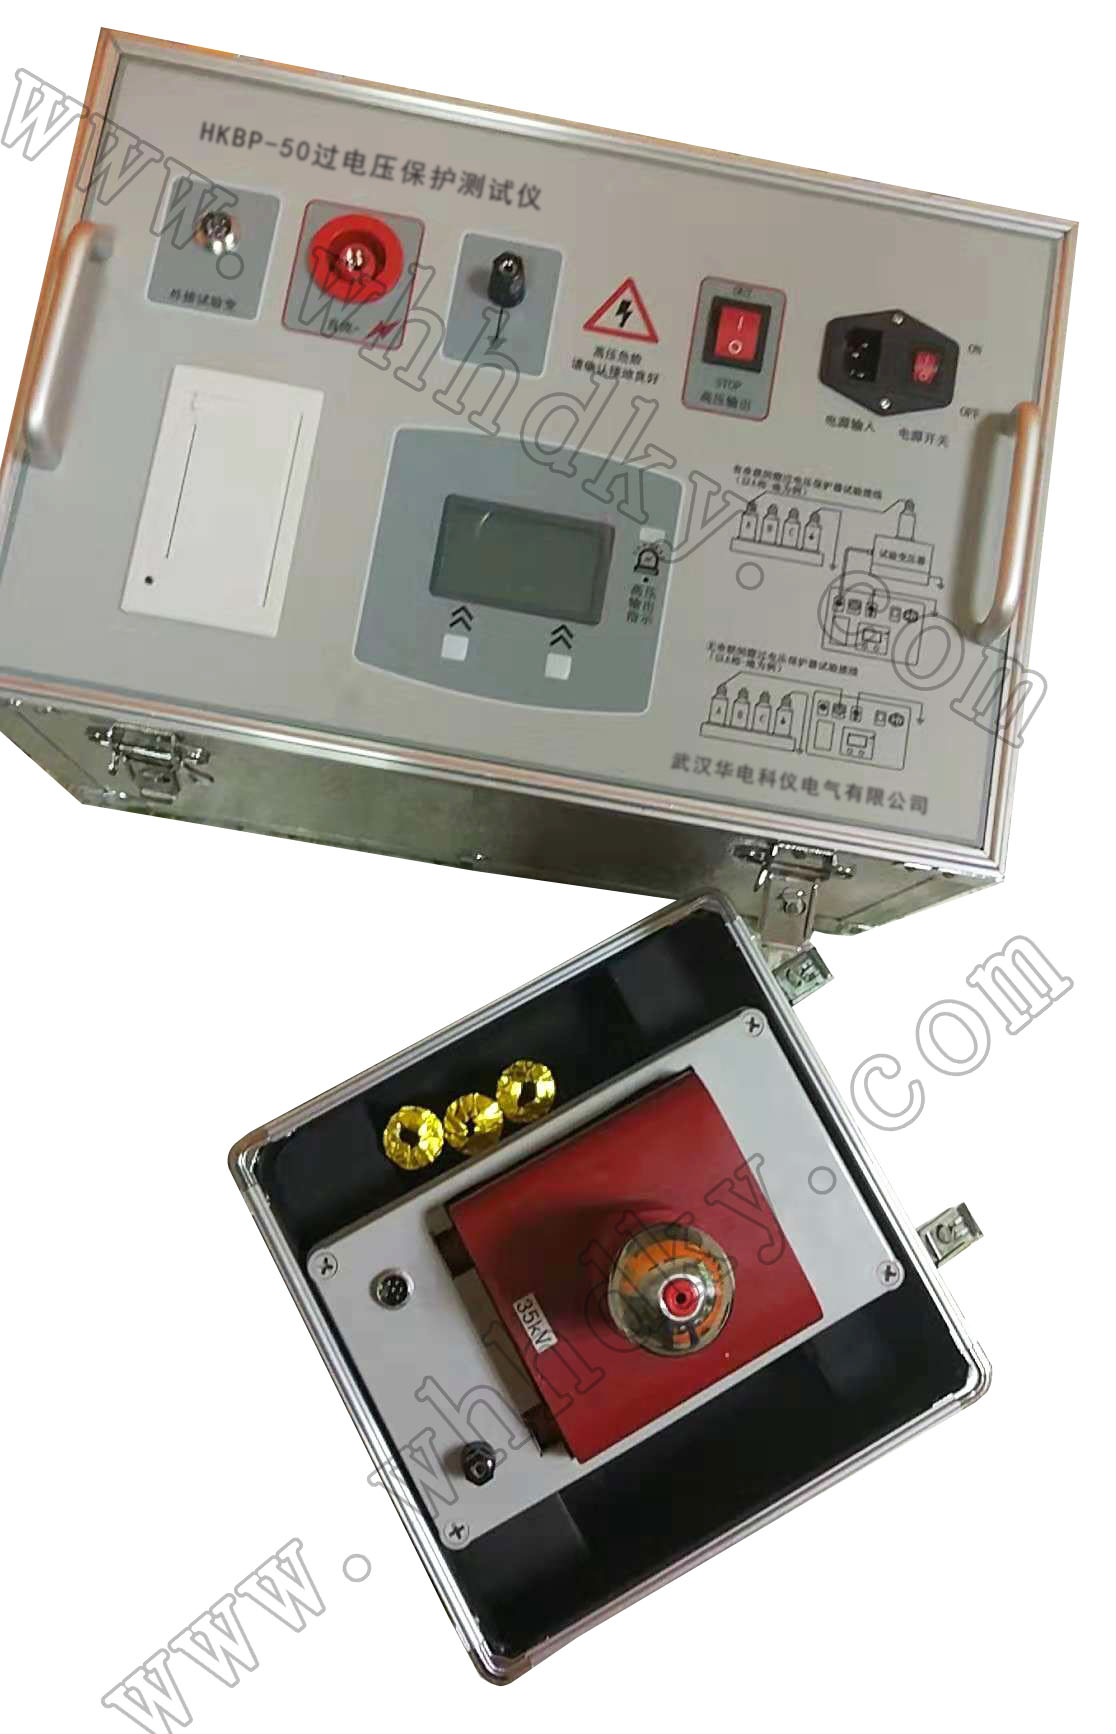 HKBP-50过电压保护测试仪